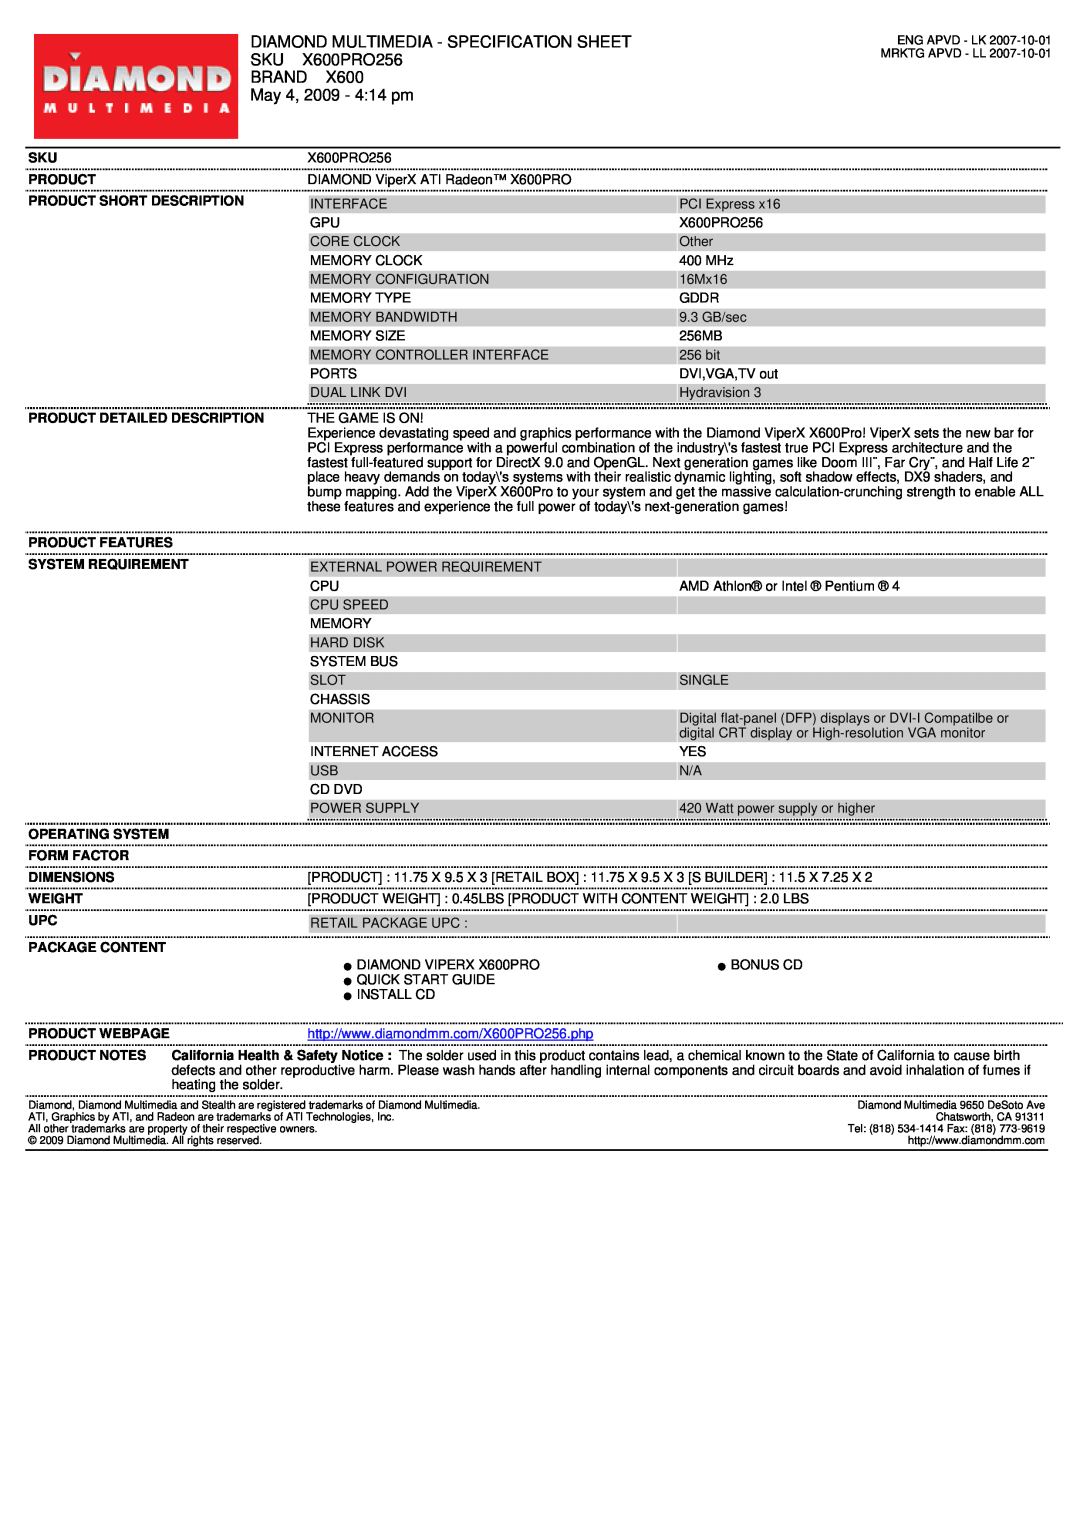 Diamond Multimedia specifications Diamond Multimedia - Specification Sheet, X600PRO256, Brand, May 4, 2009 - 414 pm 